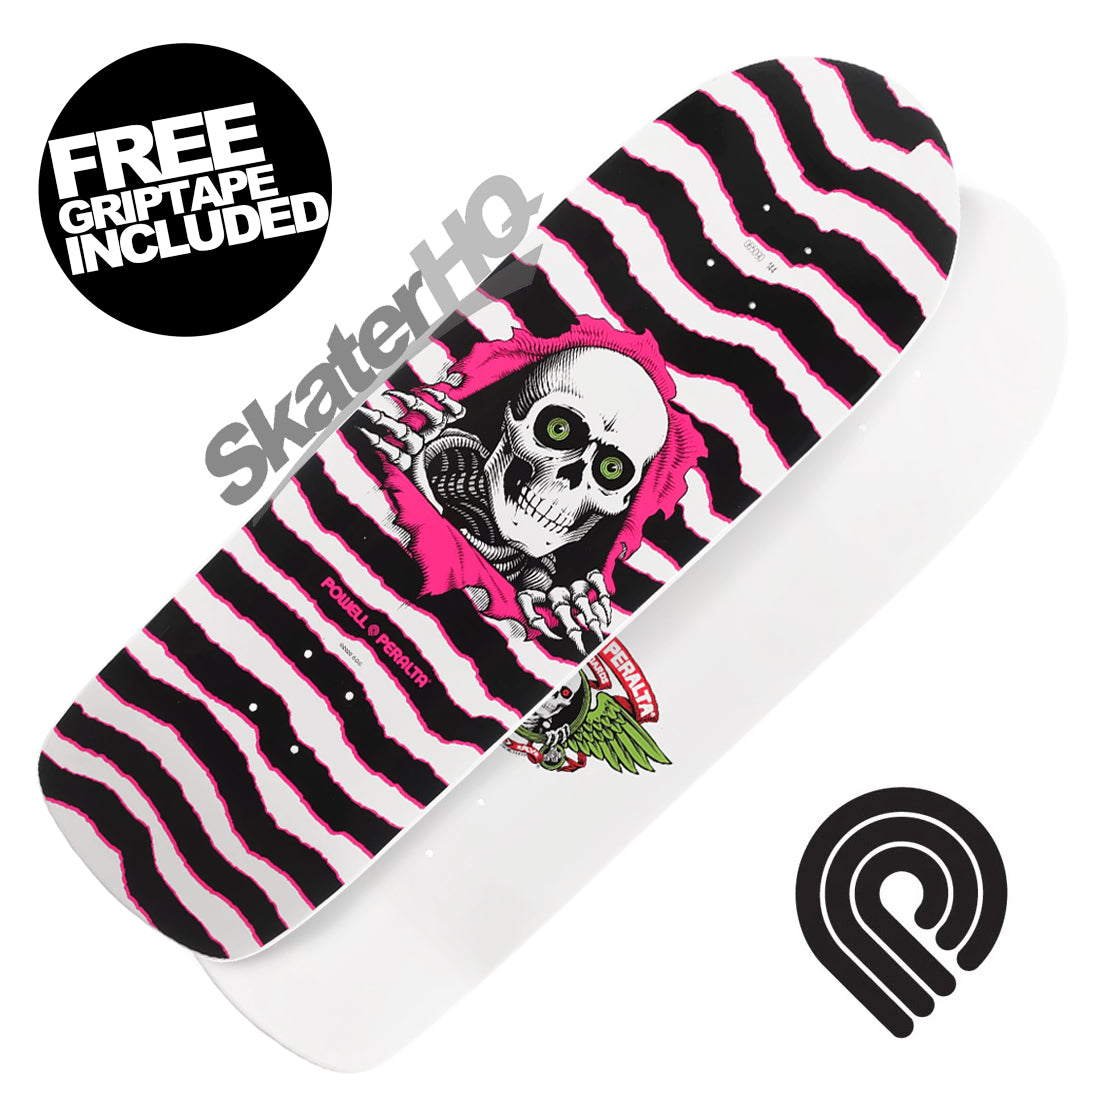 Powell Peralta OG Ripper 10.0 Deck - White/Pink Skateboard Decks Old School